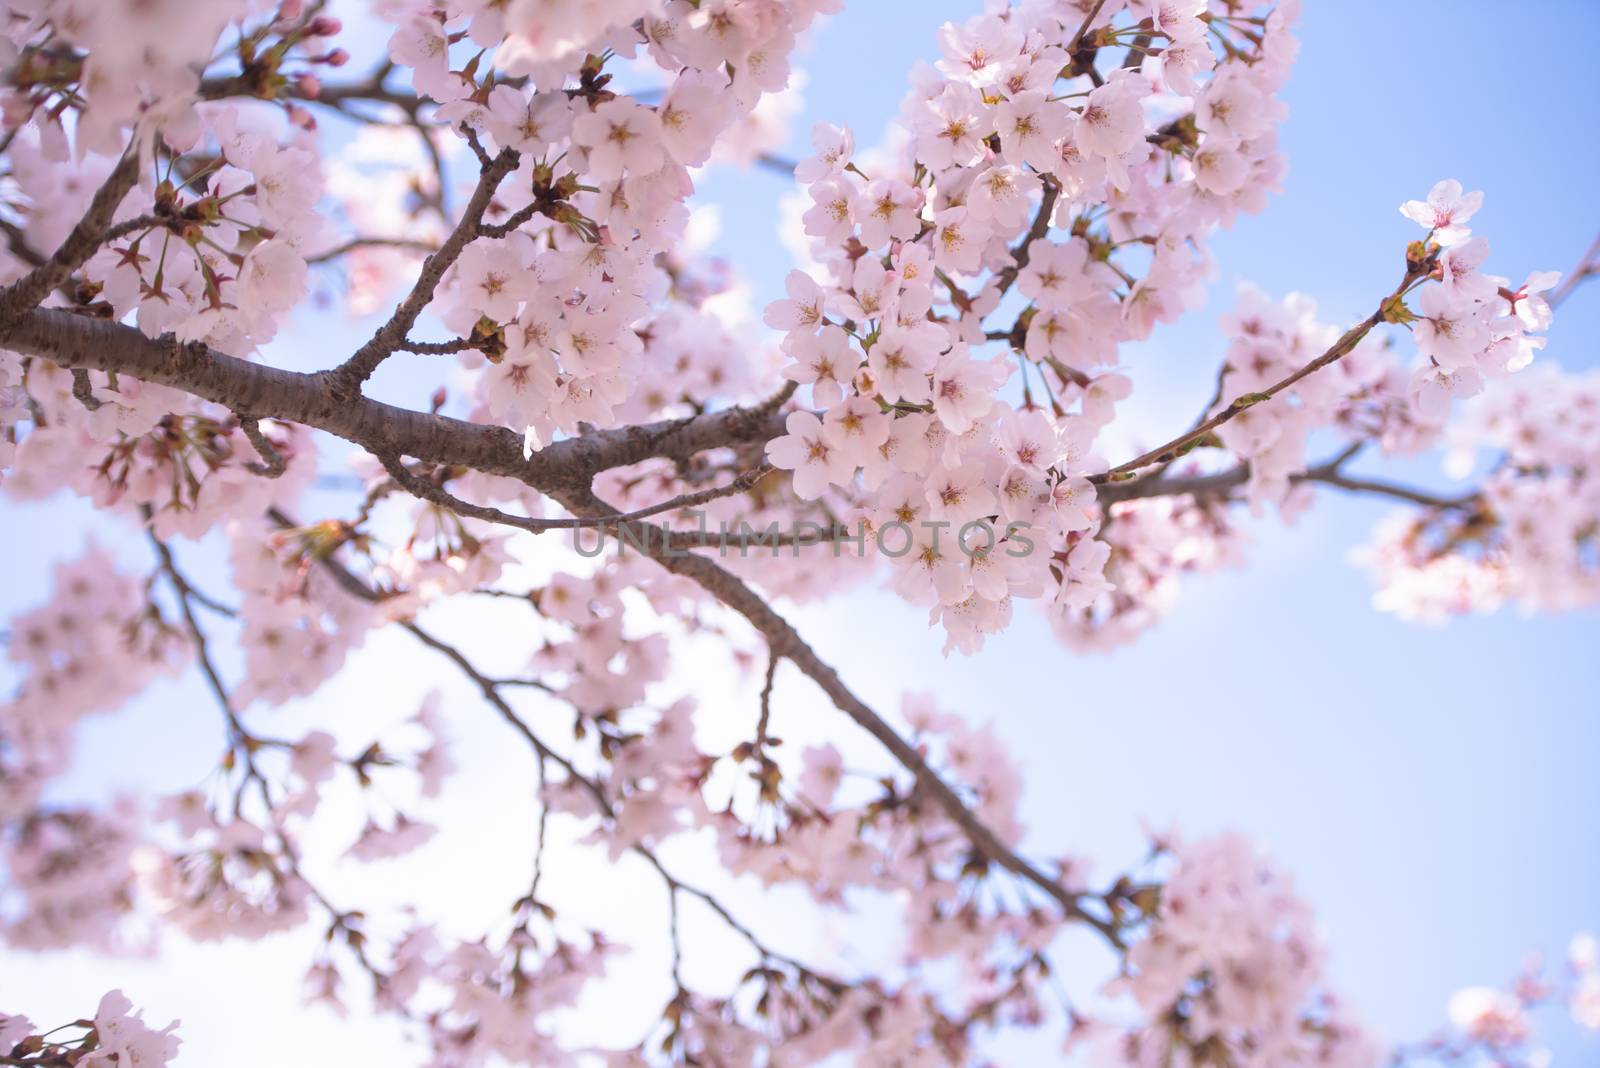 Cherry Blossom in spring with Soft focus, Sakura season in korea,Background. by wijitamkapet@gmail.com